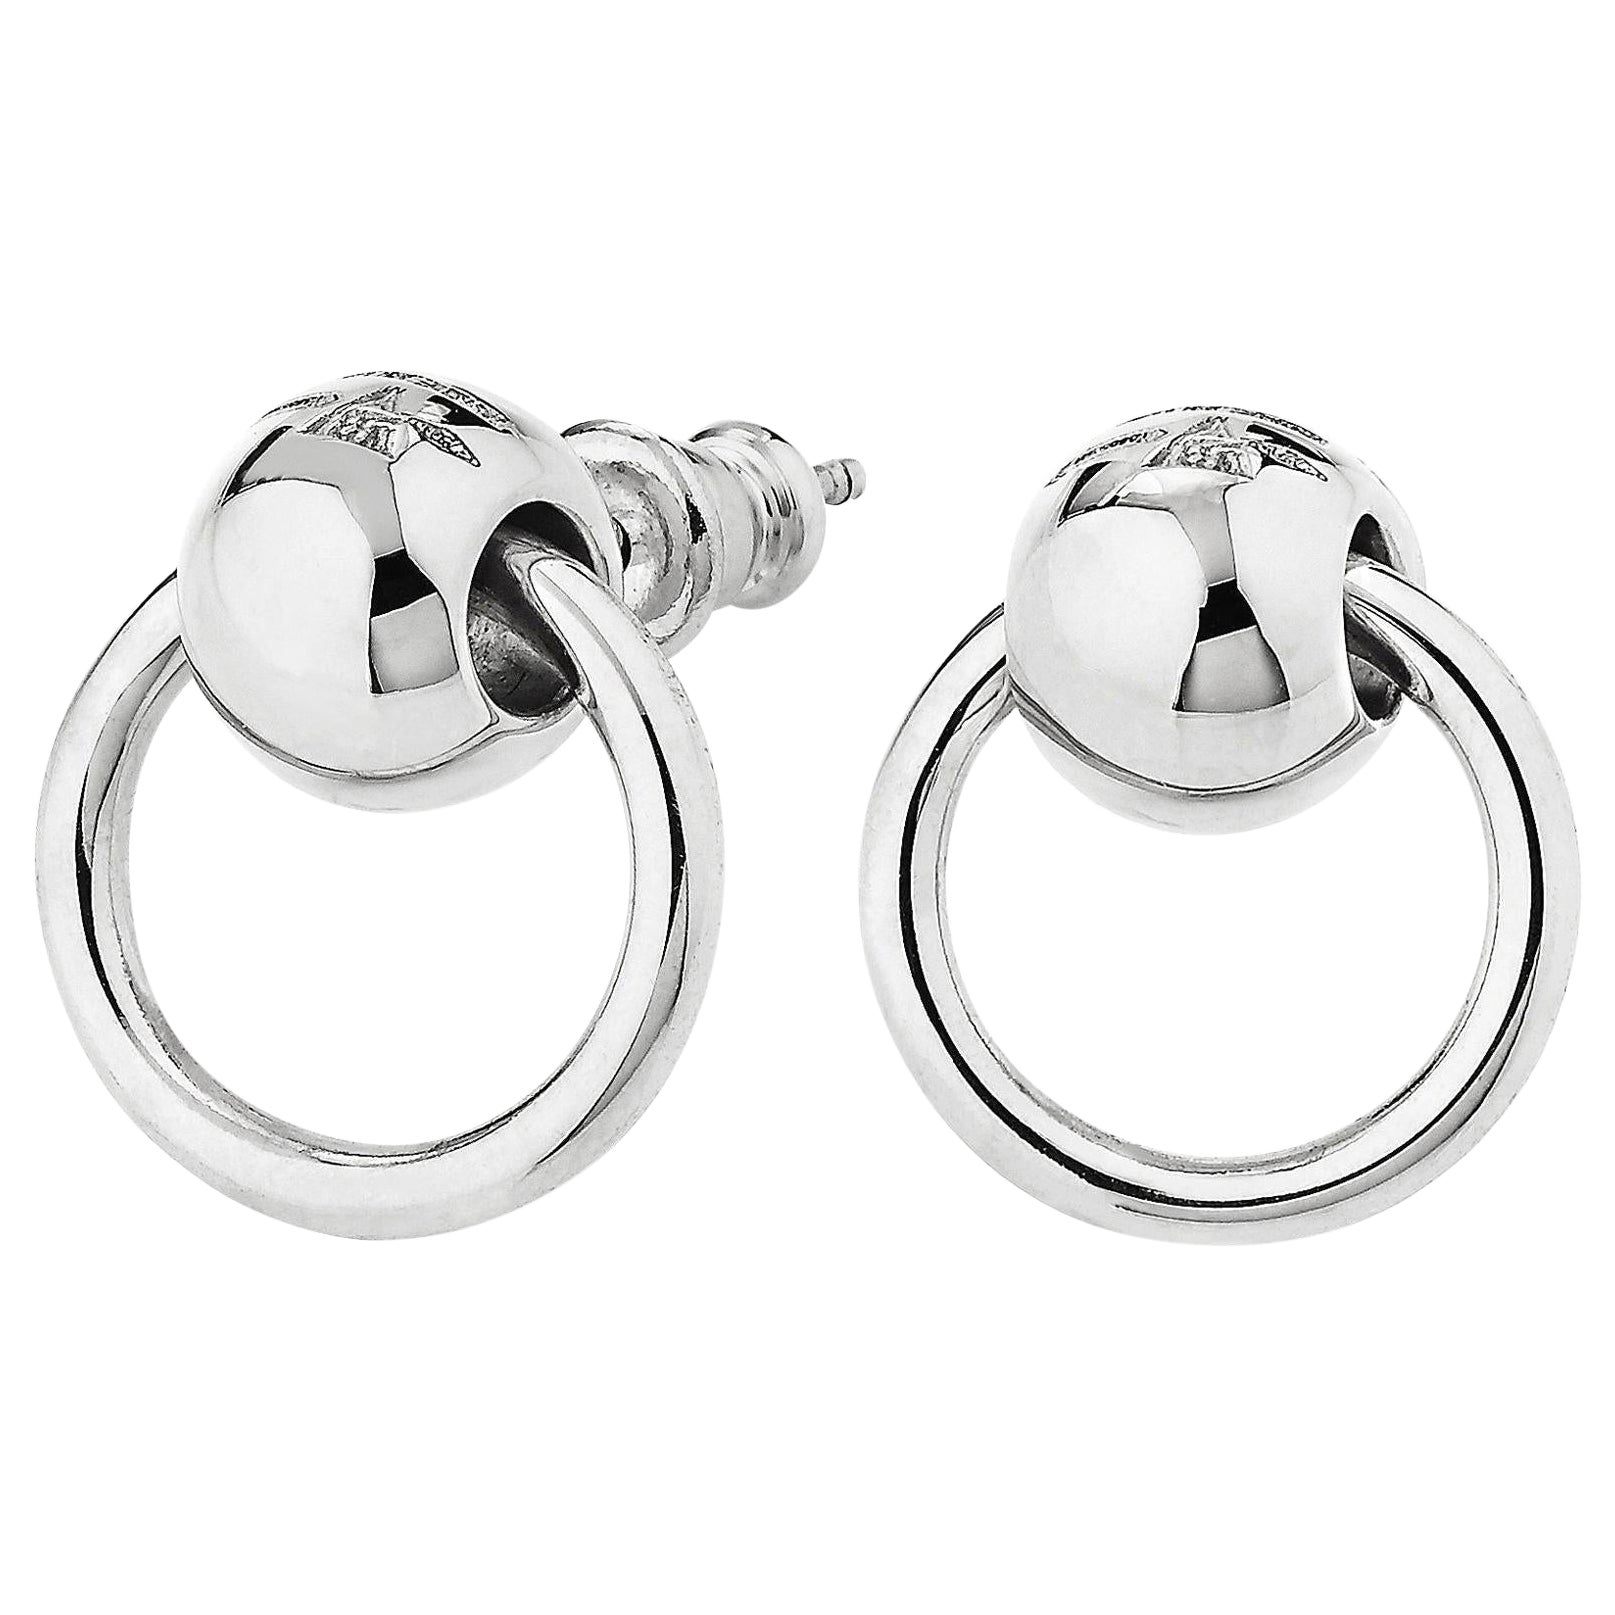 Betony Vernon "O'Ring Earrings" Sterling Silver 925 in Stock For Sale